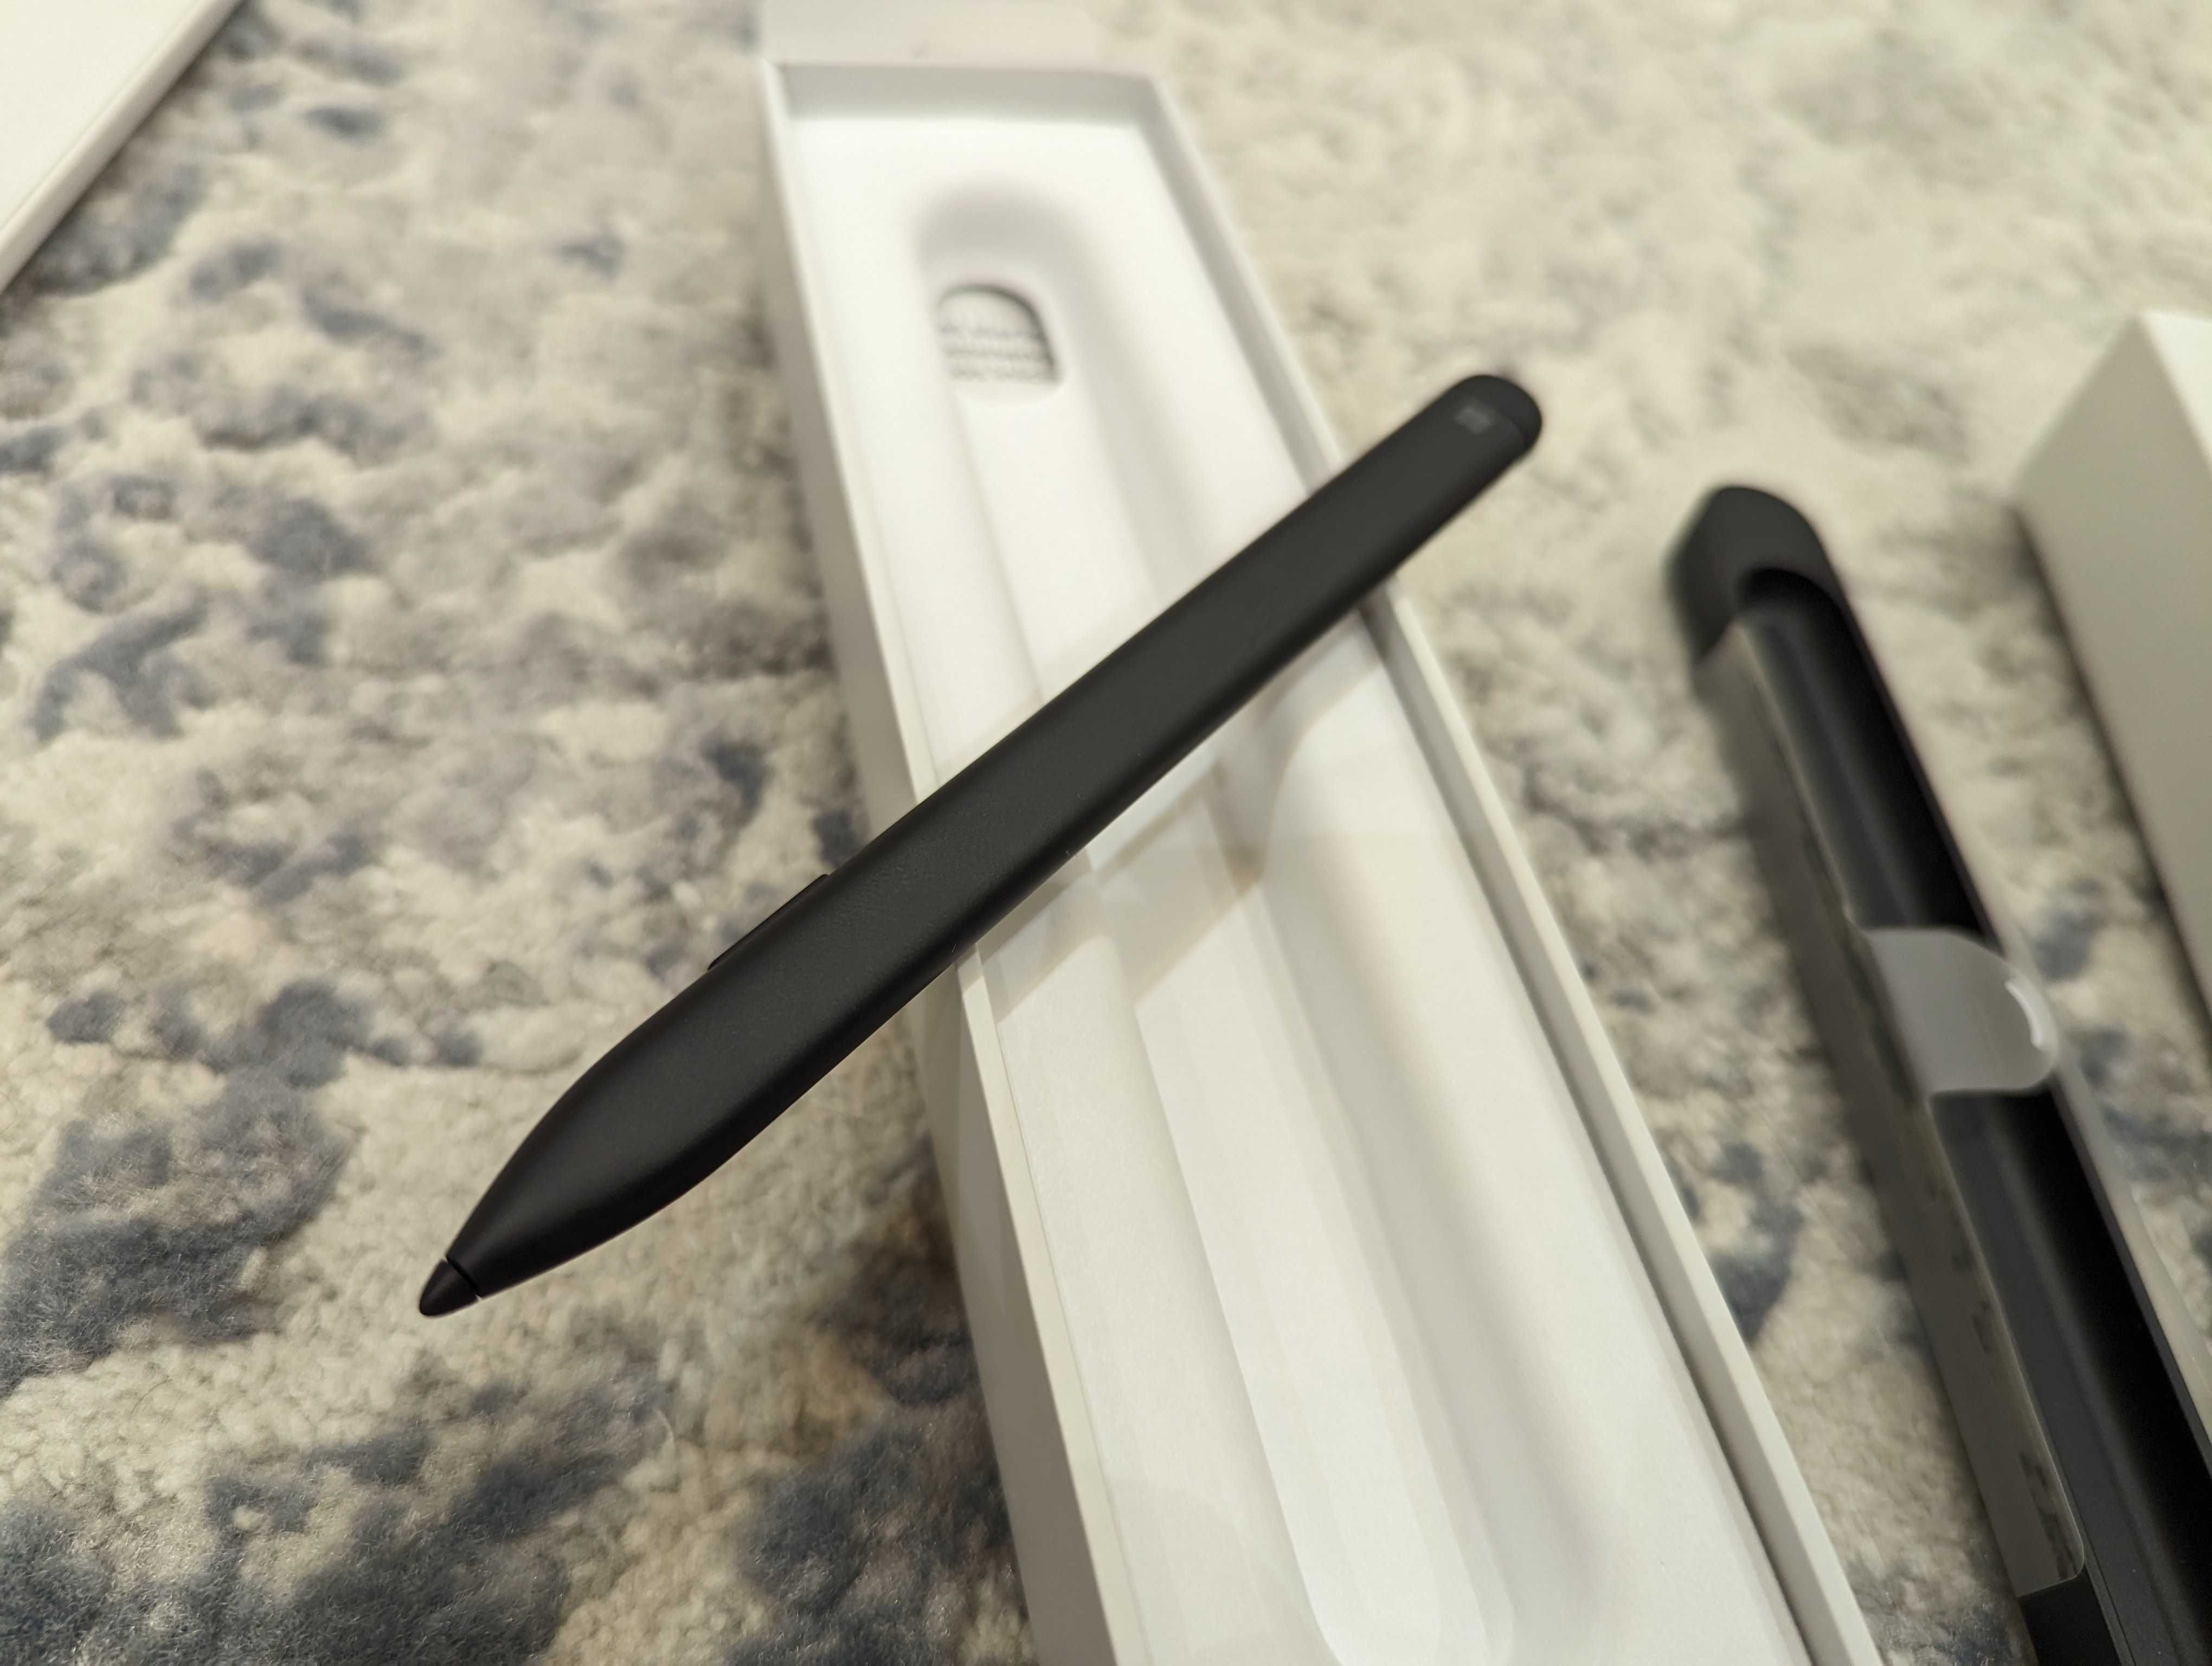 Microsoft Surface Slim Pen with Charger ручка-стилус с зарядкой